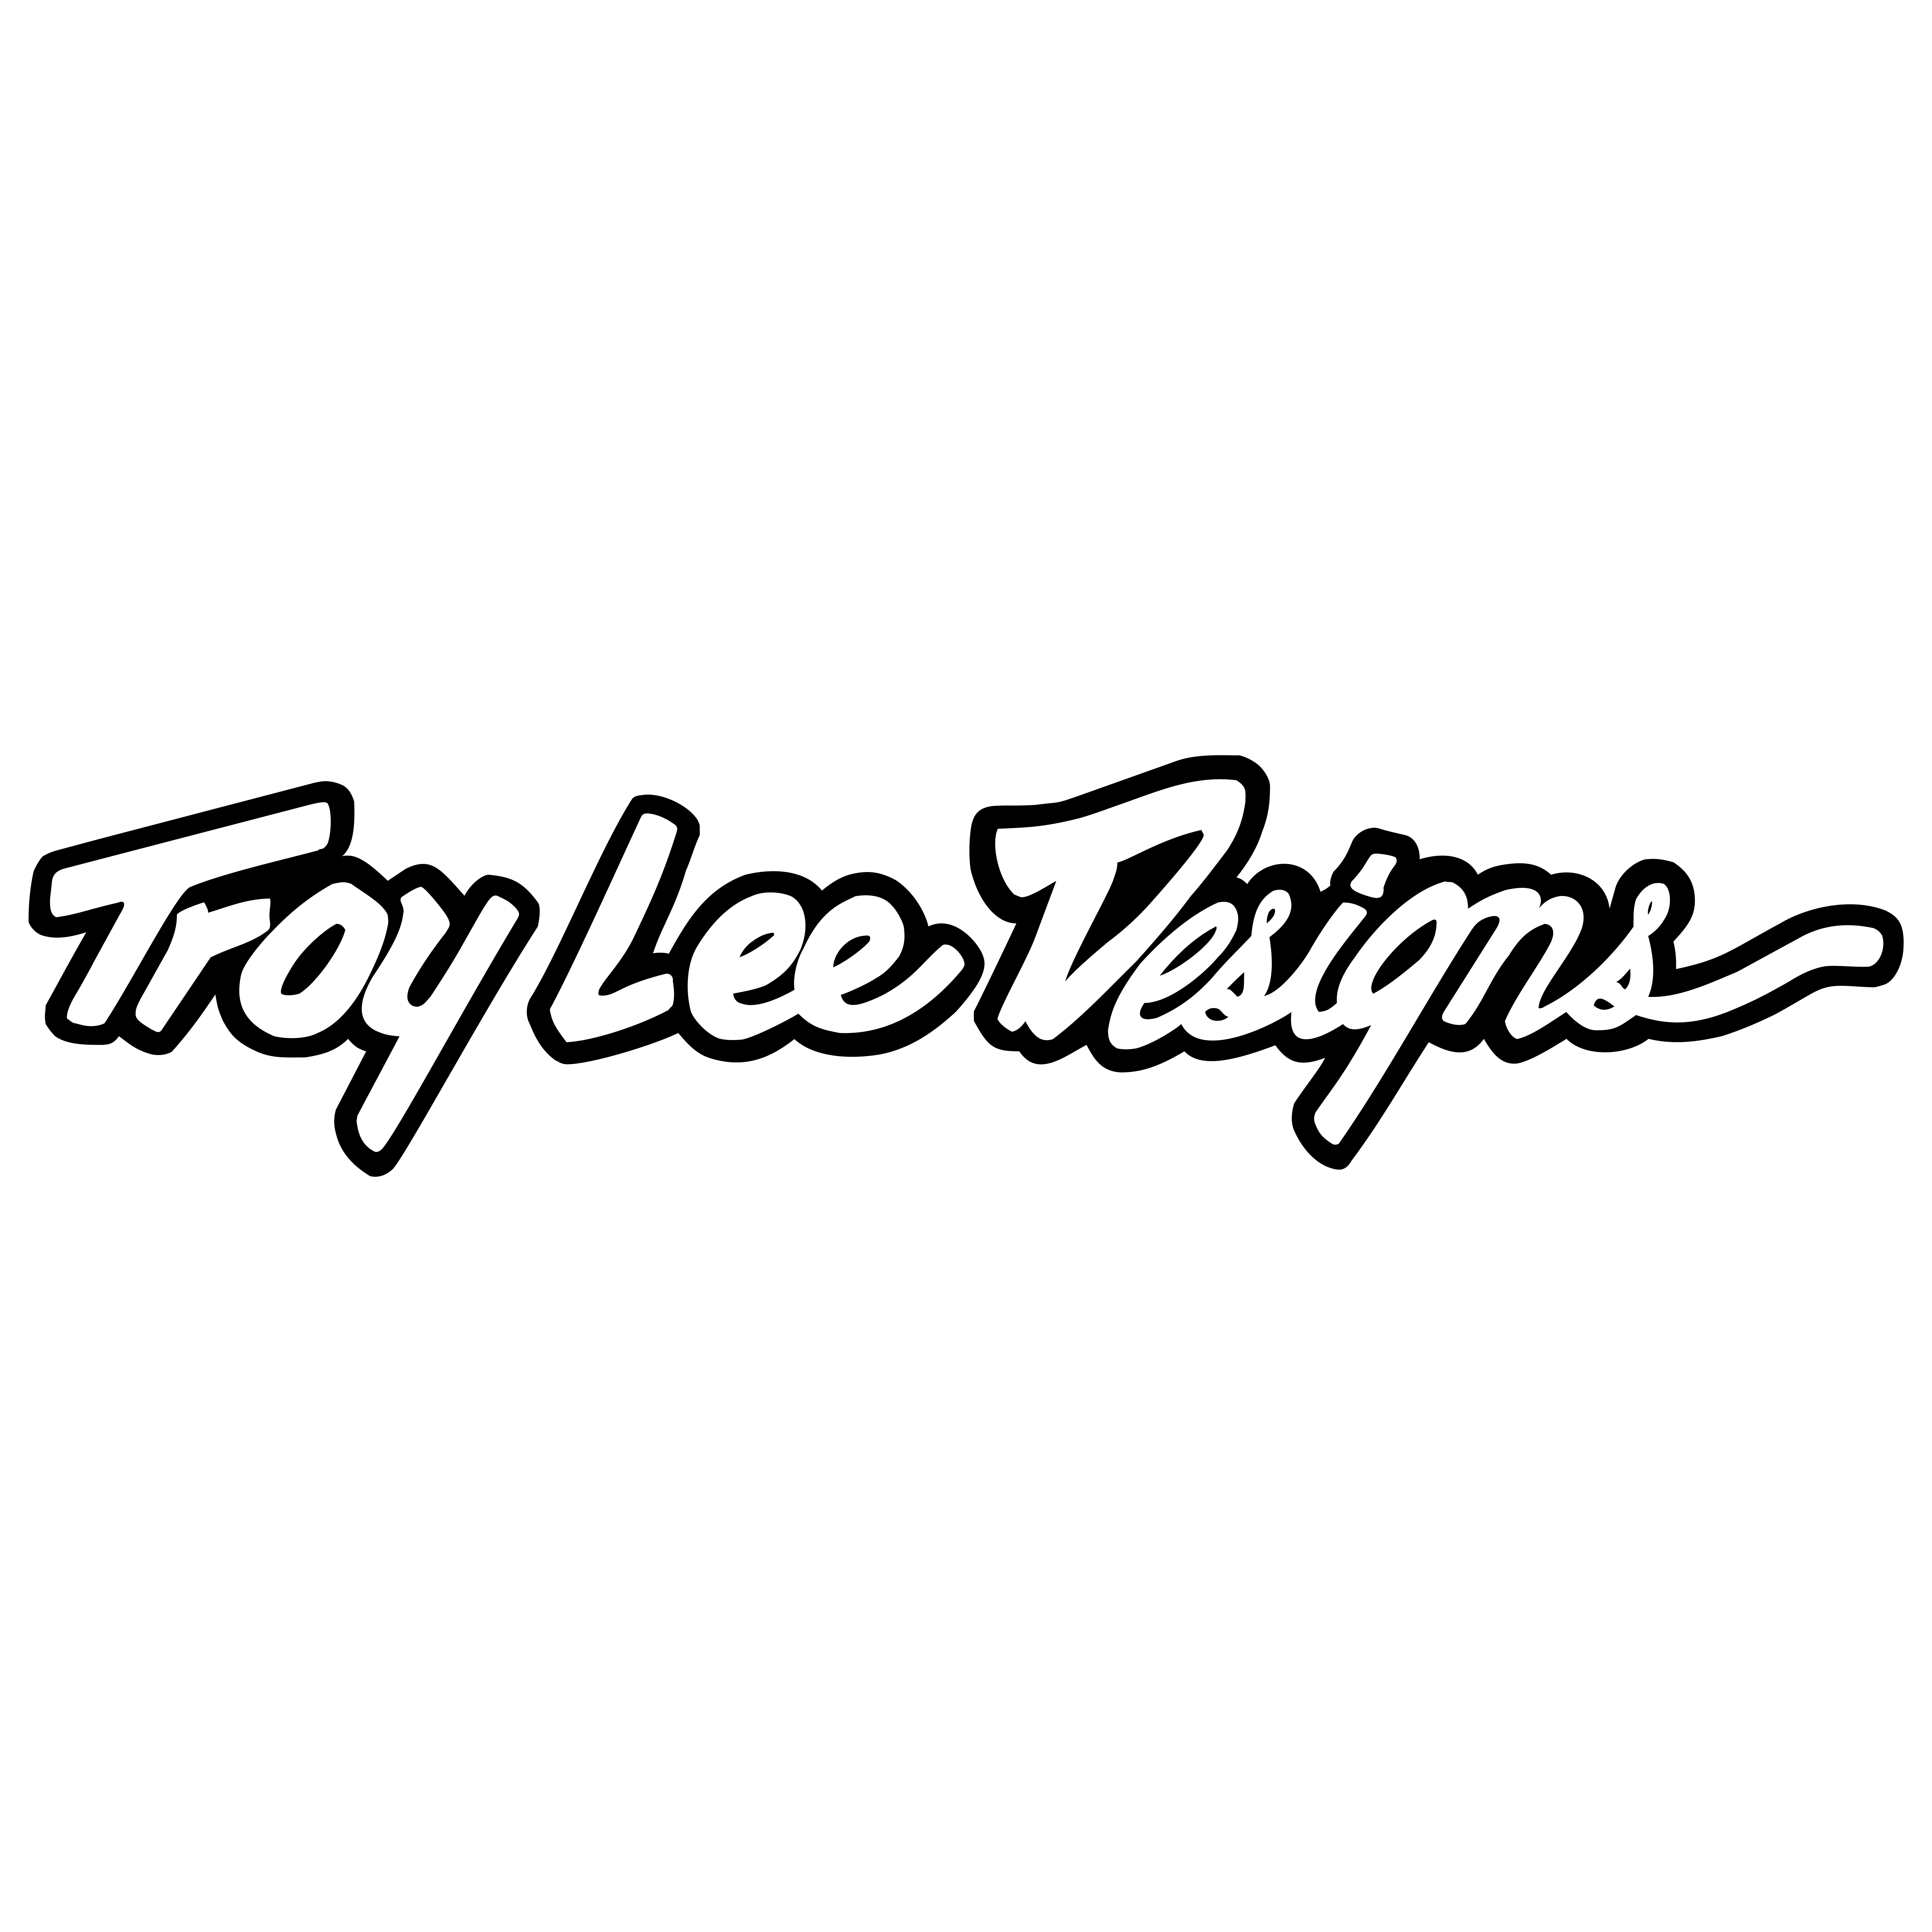 Troylee design Logo